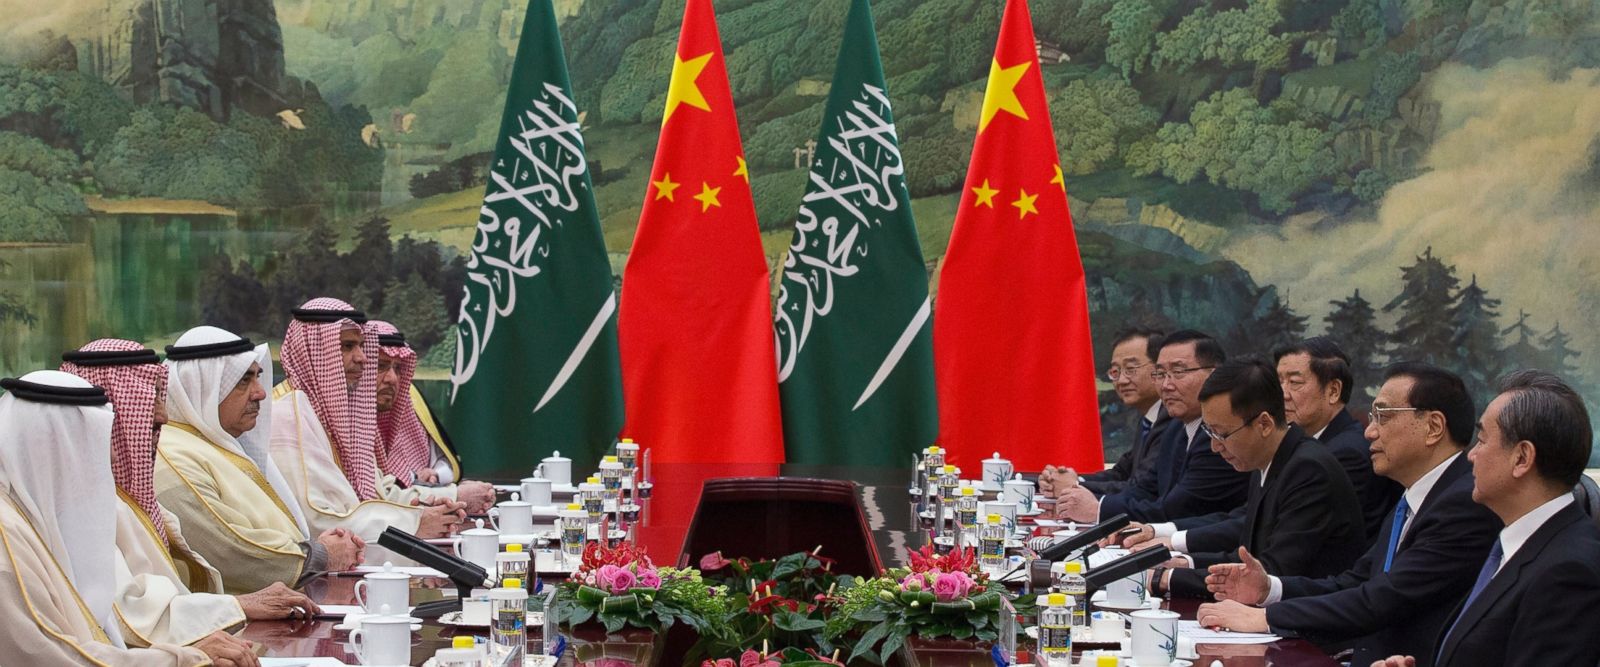 China, Saudi Arabia sign $65 billion in cooperation deals